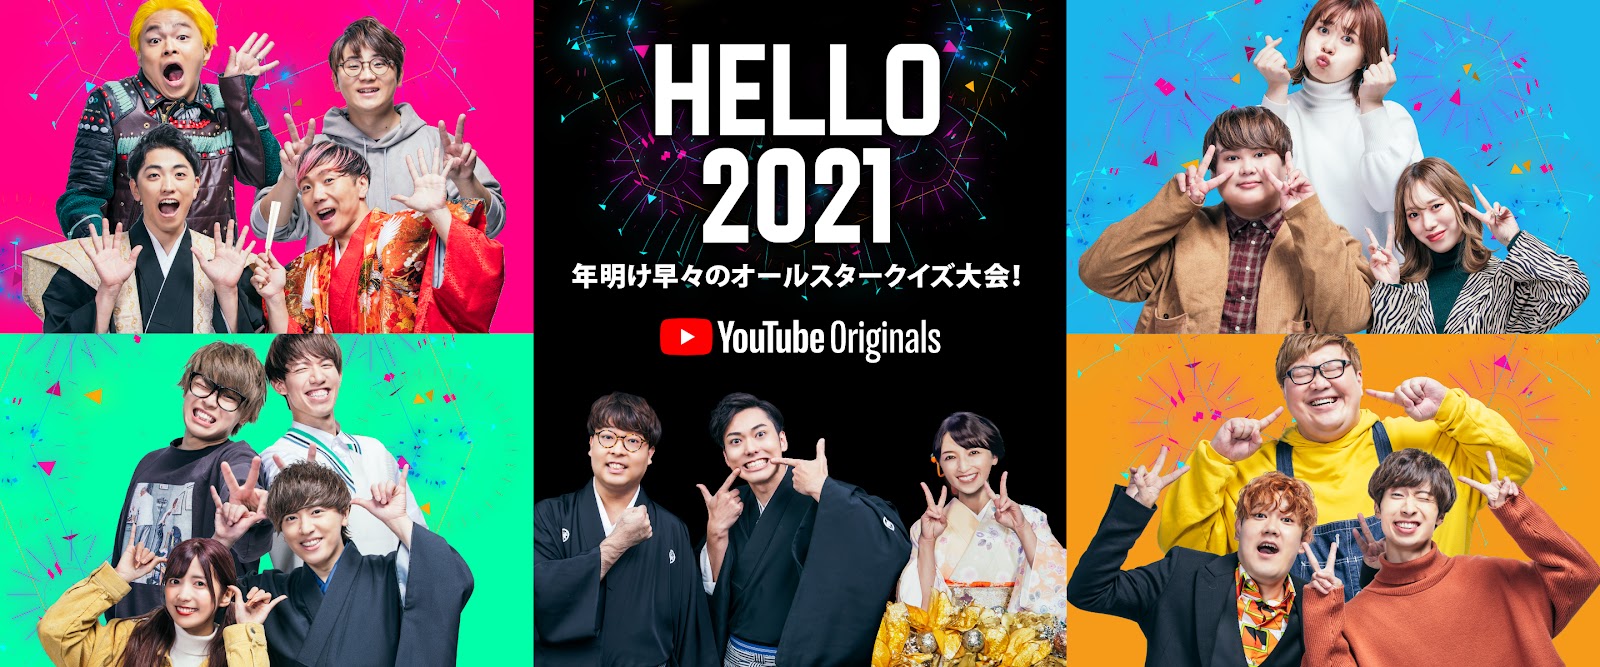 Youtube Japan Blog Youtube Originals 特別番組 Hello 21 年明け早々のオールスタークイズ大会 の公開決定